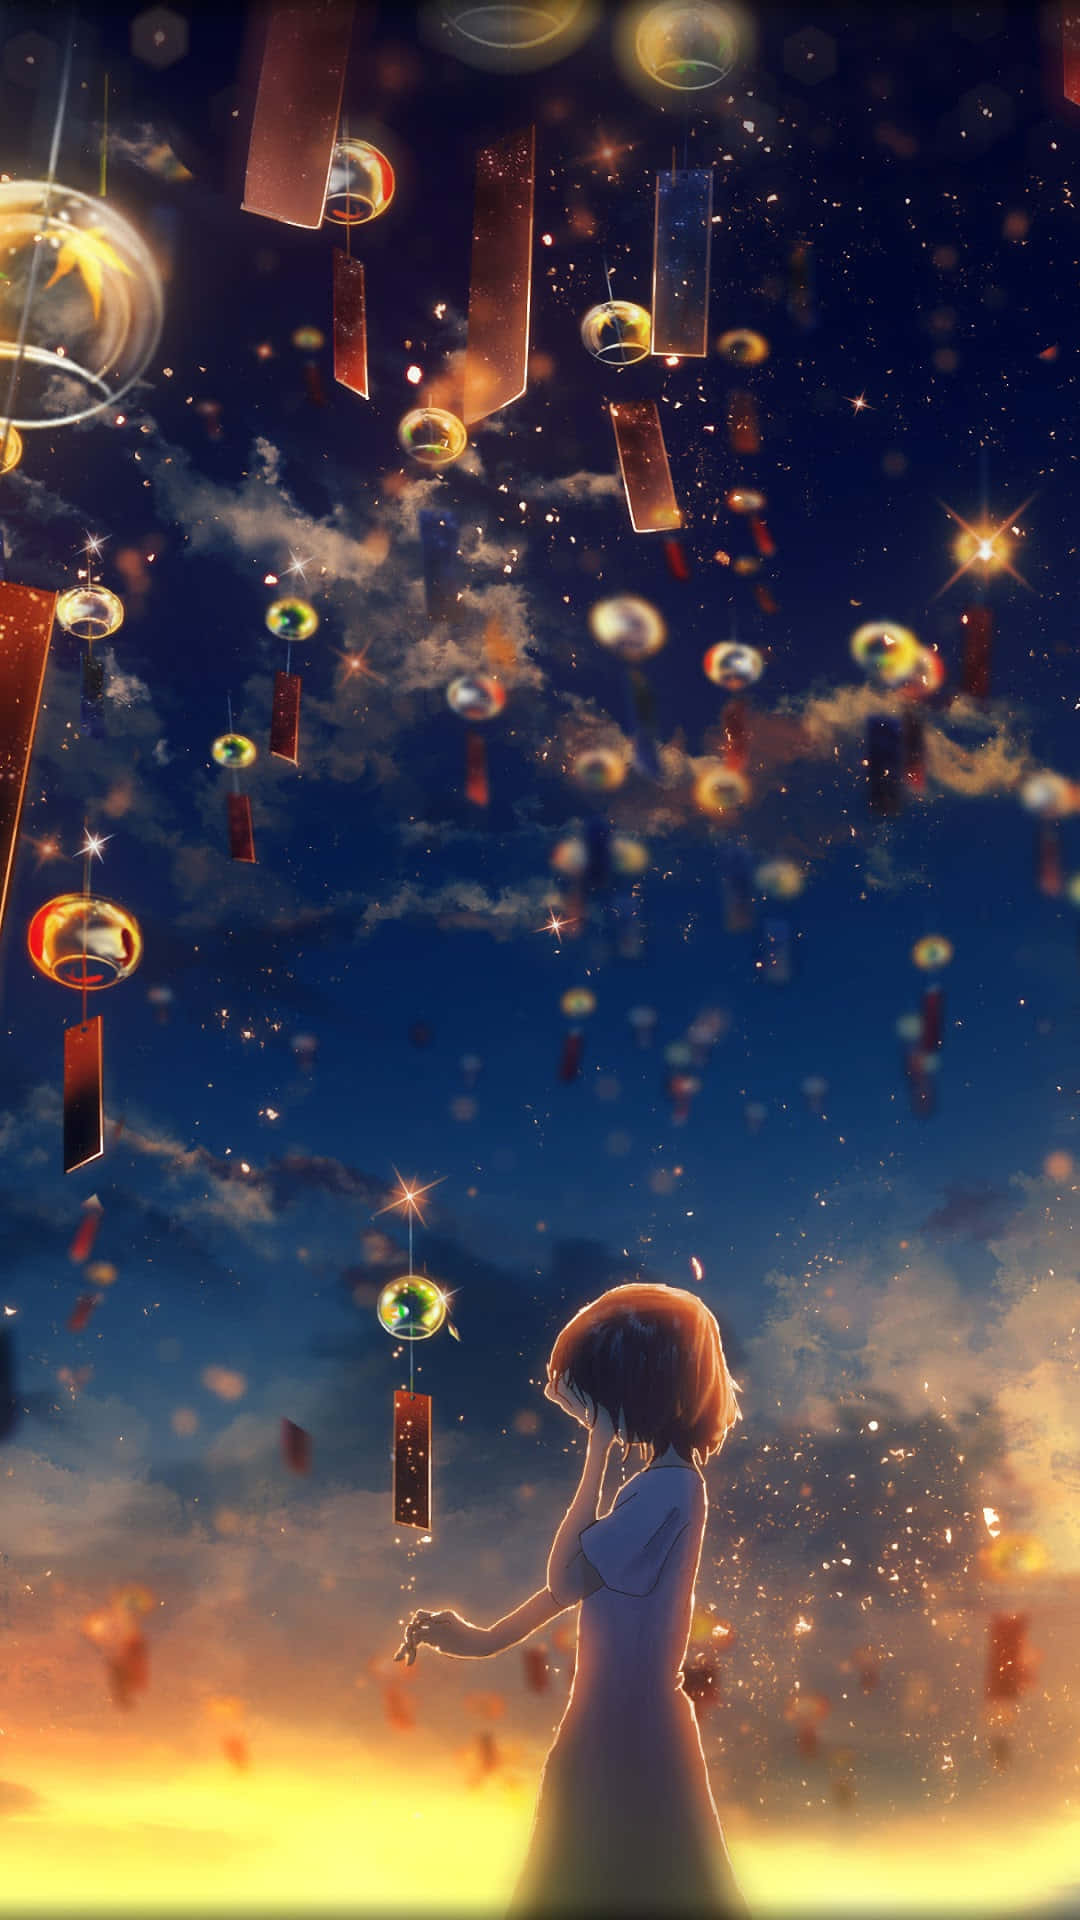 Sad Crying Anime Girl With Flying Lanterns Wallpaper